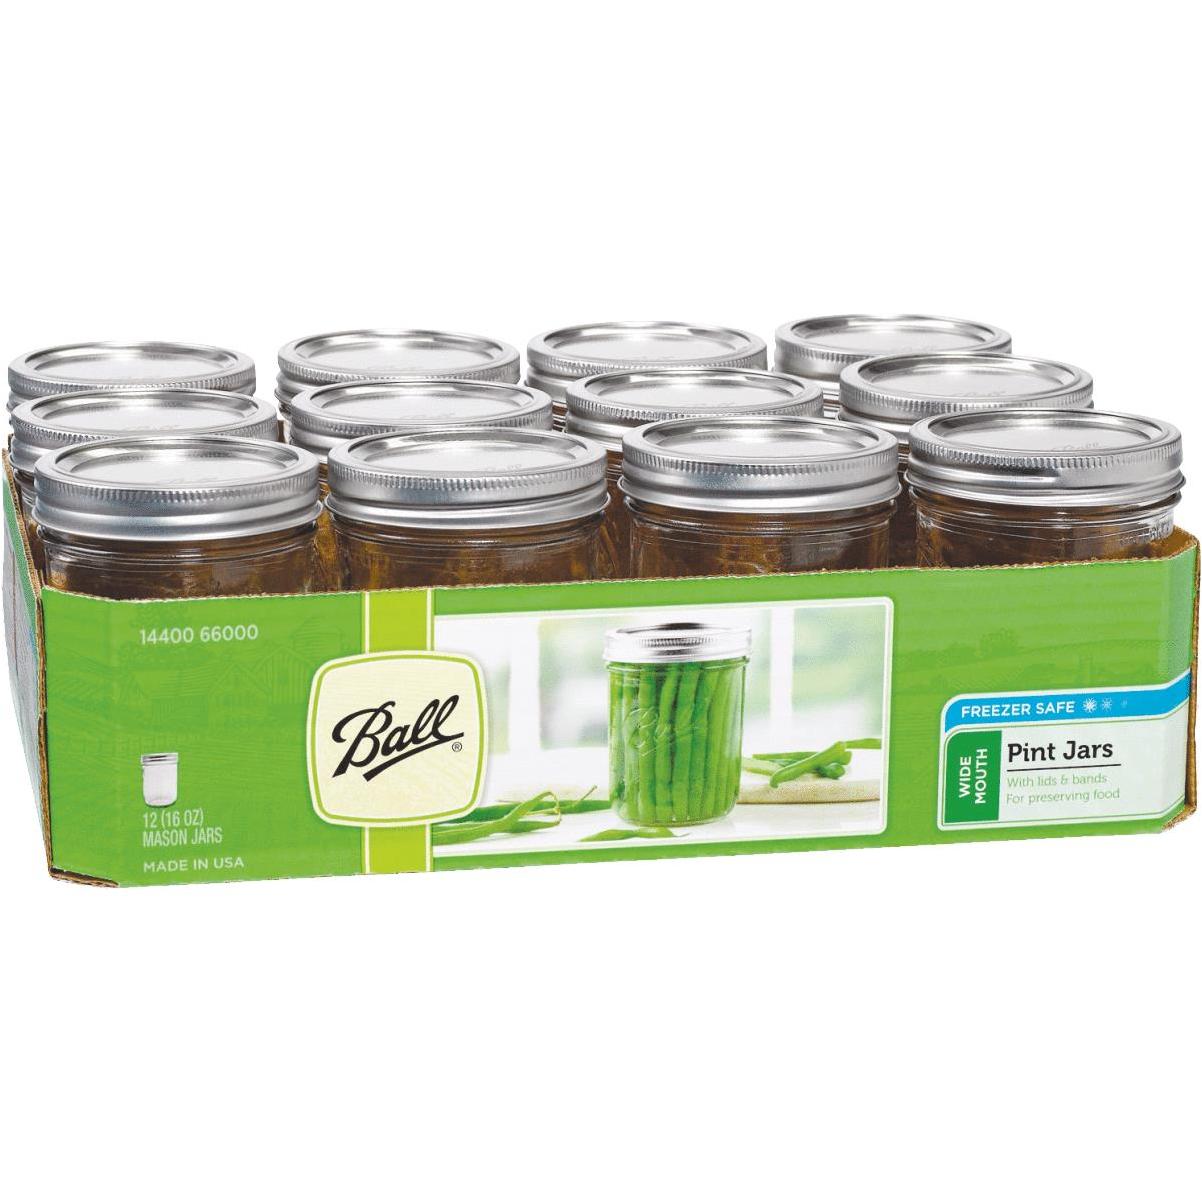 Gulf Wax Household Paraffin Wax - Shop Canning Supplies at H-E-B